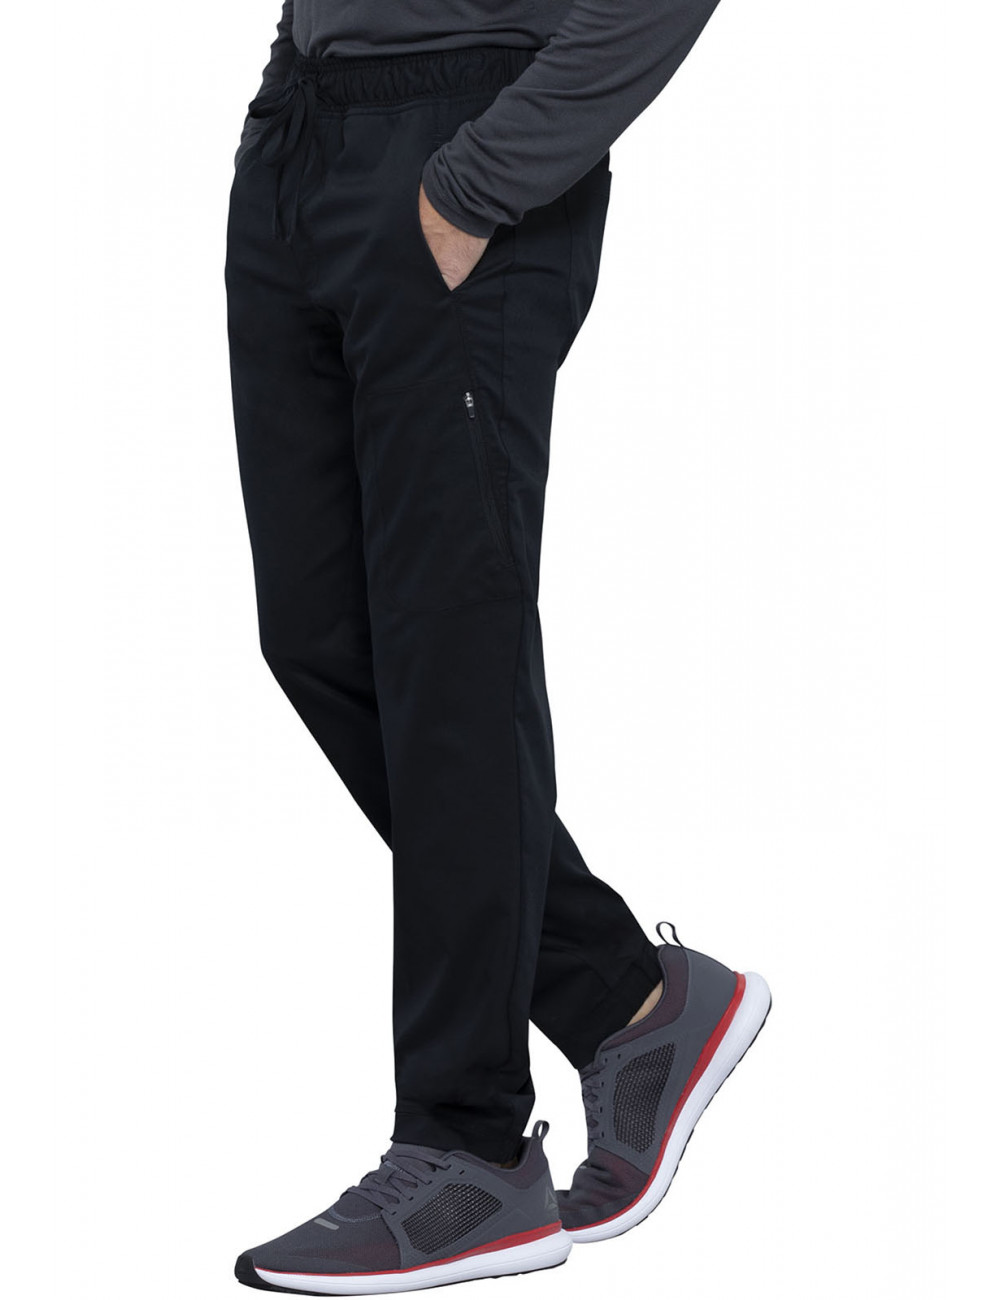 Soustons - Pantalon médical - Homme - Jogging - 5 poches - Cherokee